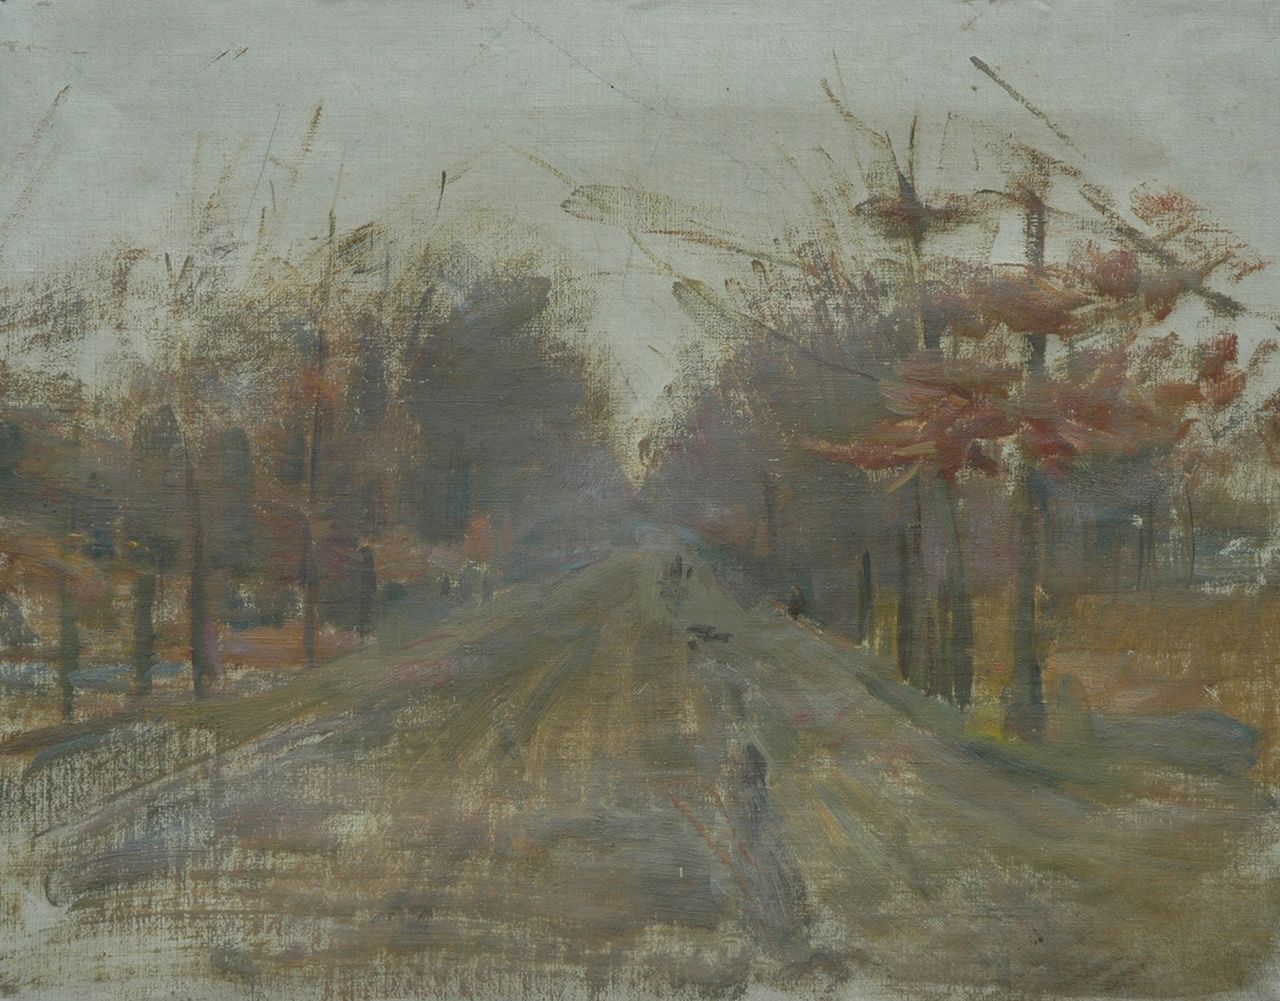 Mauve jr. A.R.  | Anton Rudolf Mauve jr., Country road, Öl auf Leinwand 43,5 x 53,5 cm